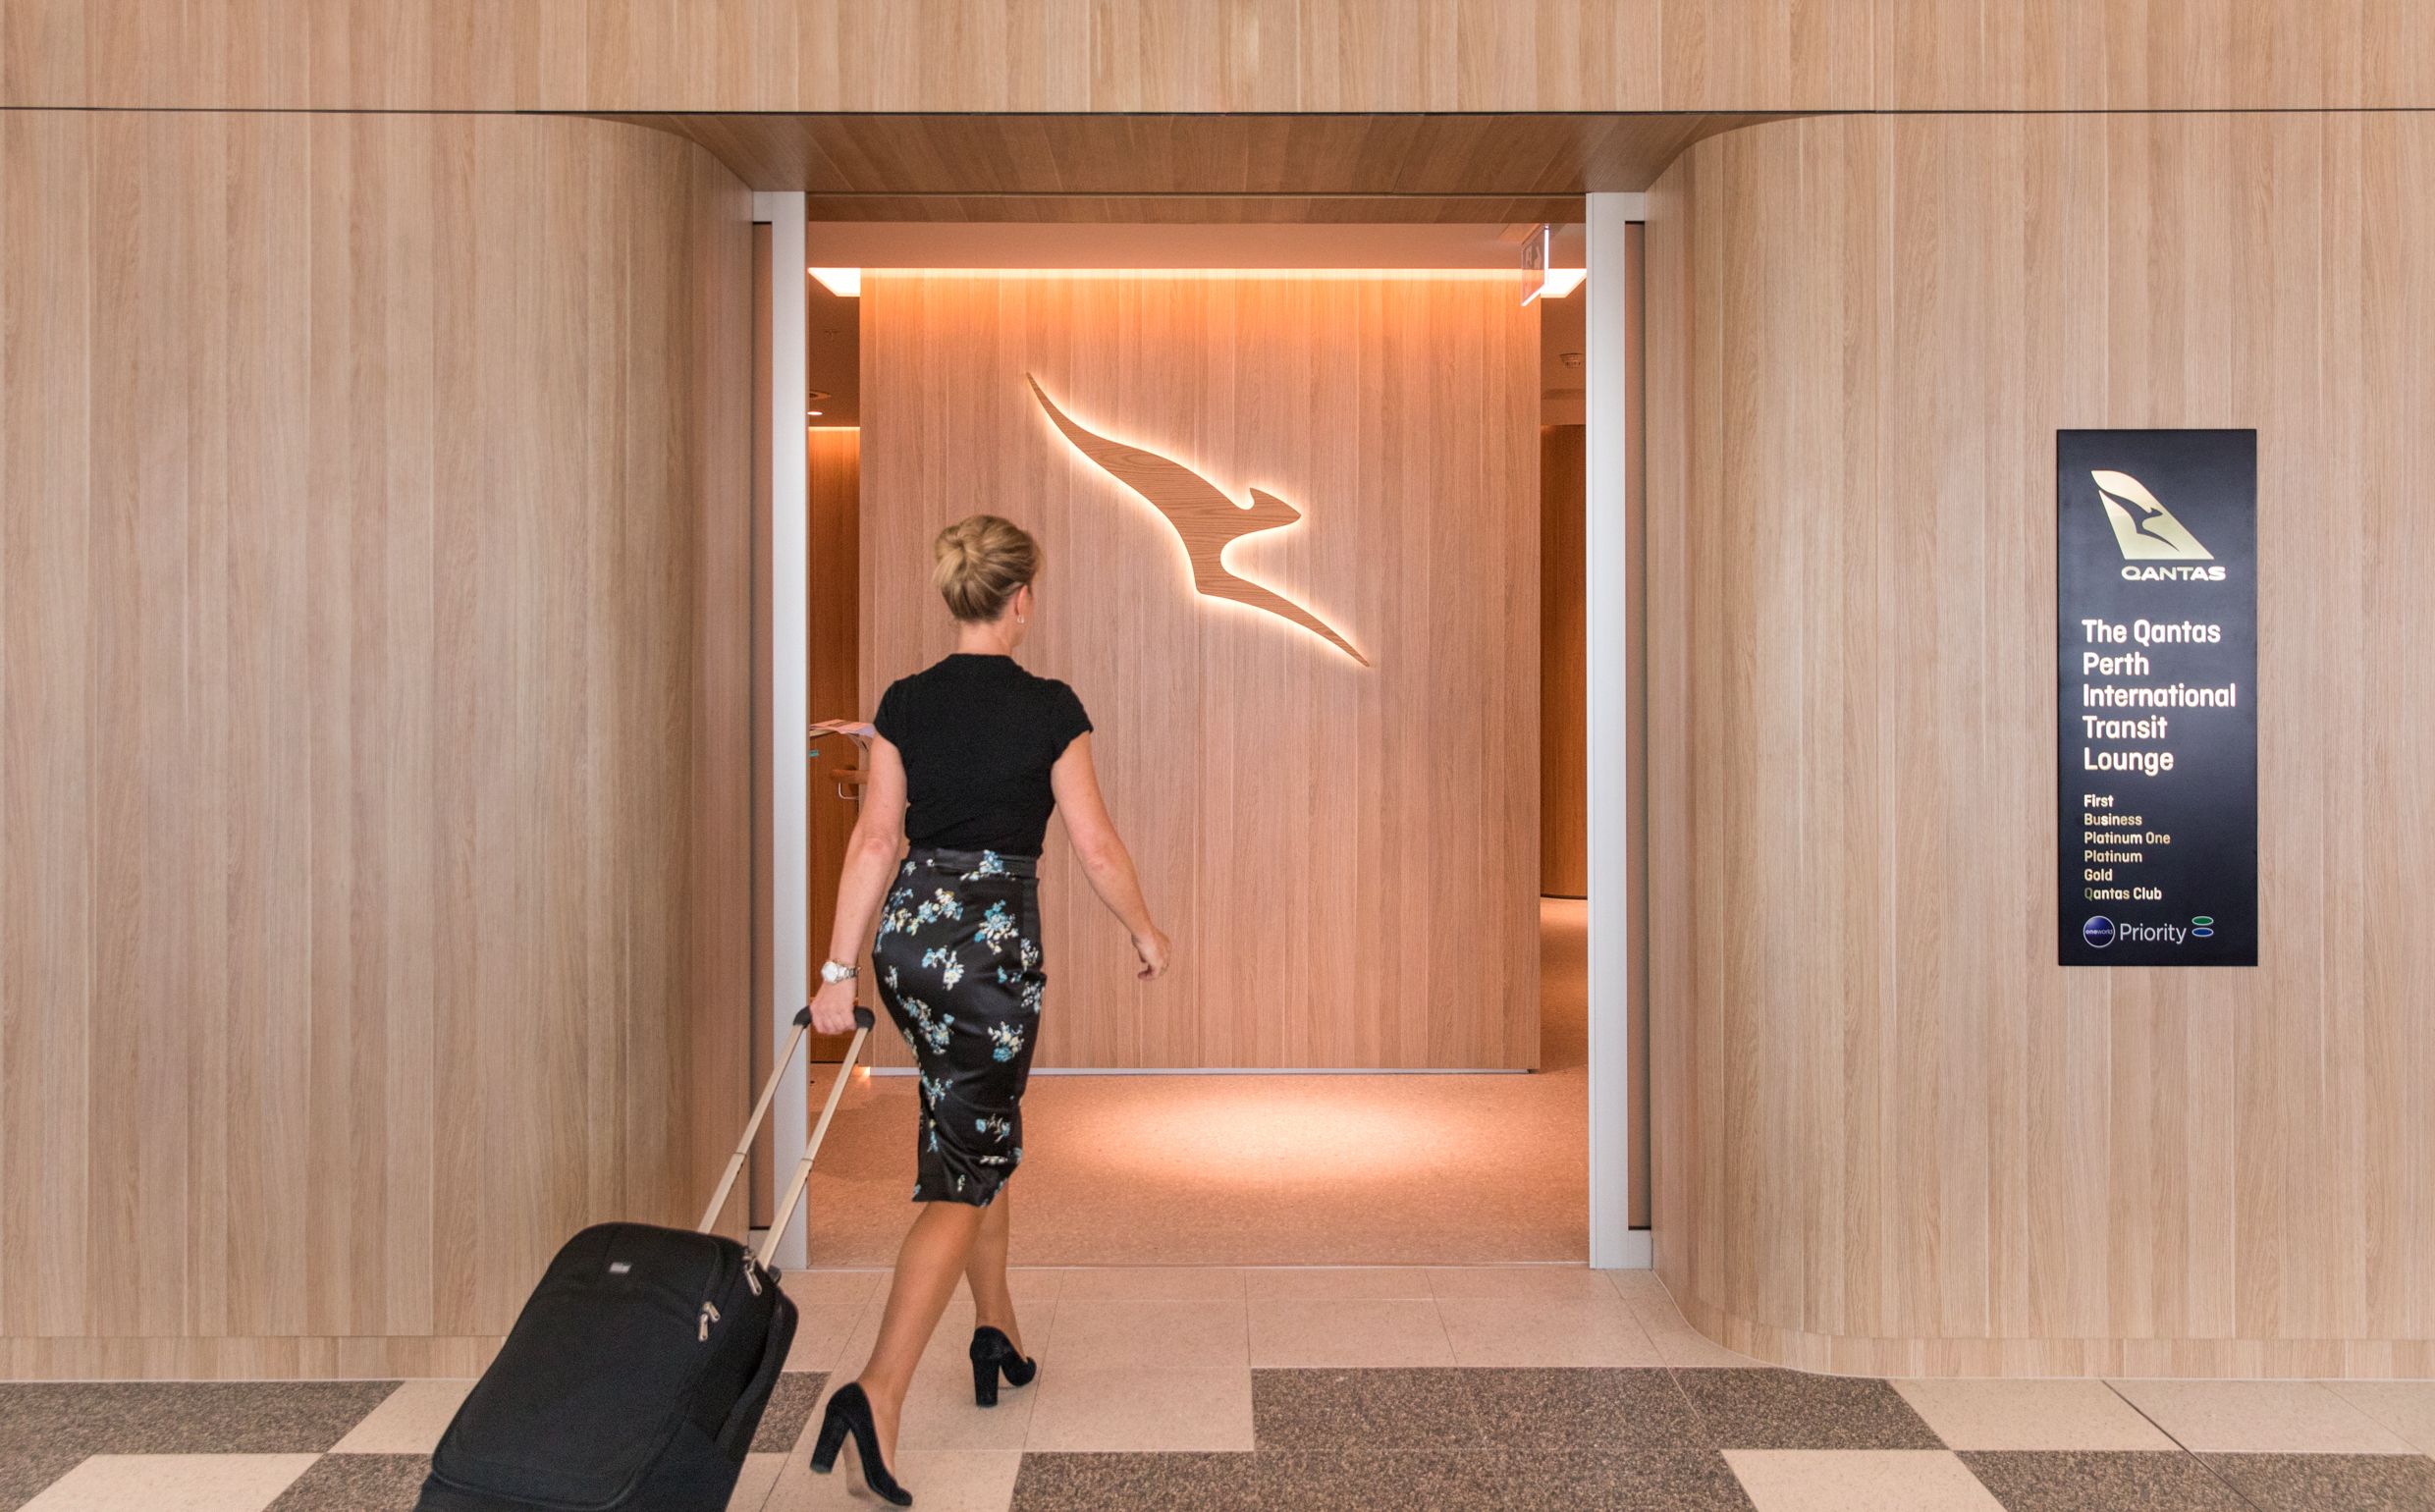 A qantas passenger going into a lounge